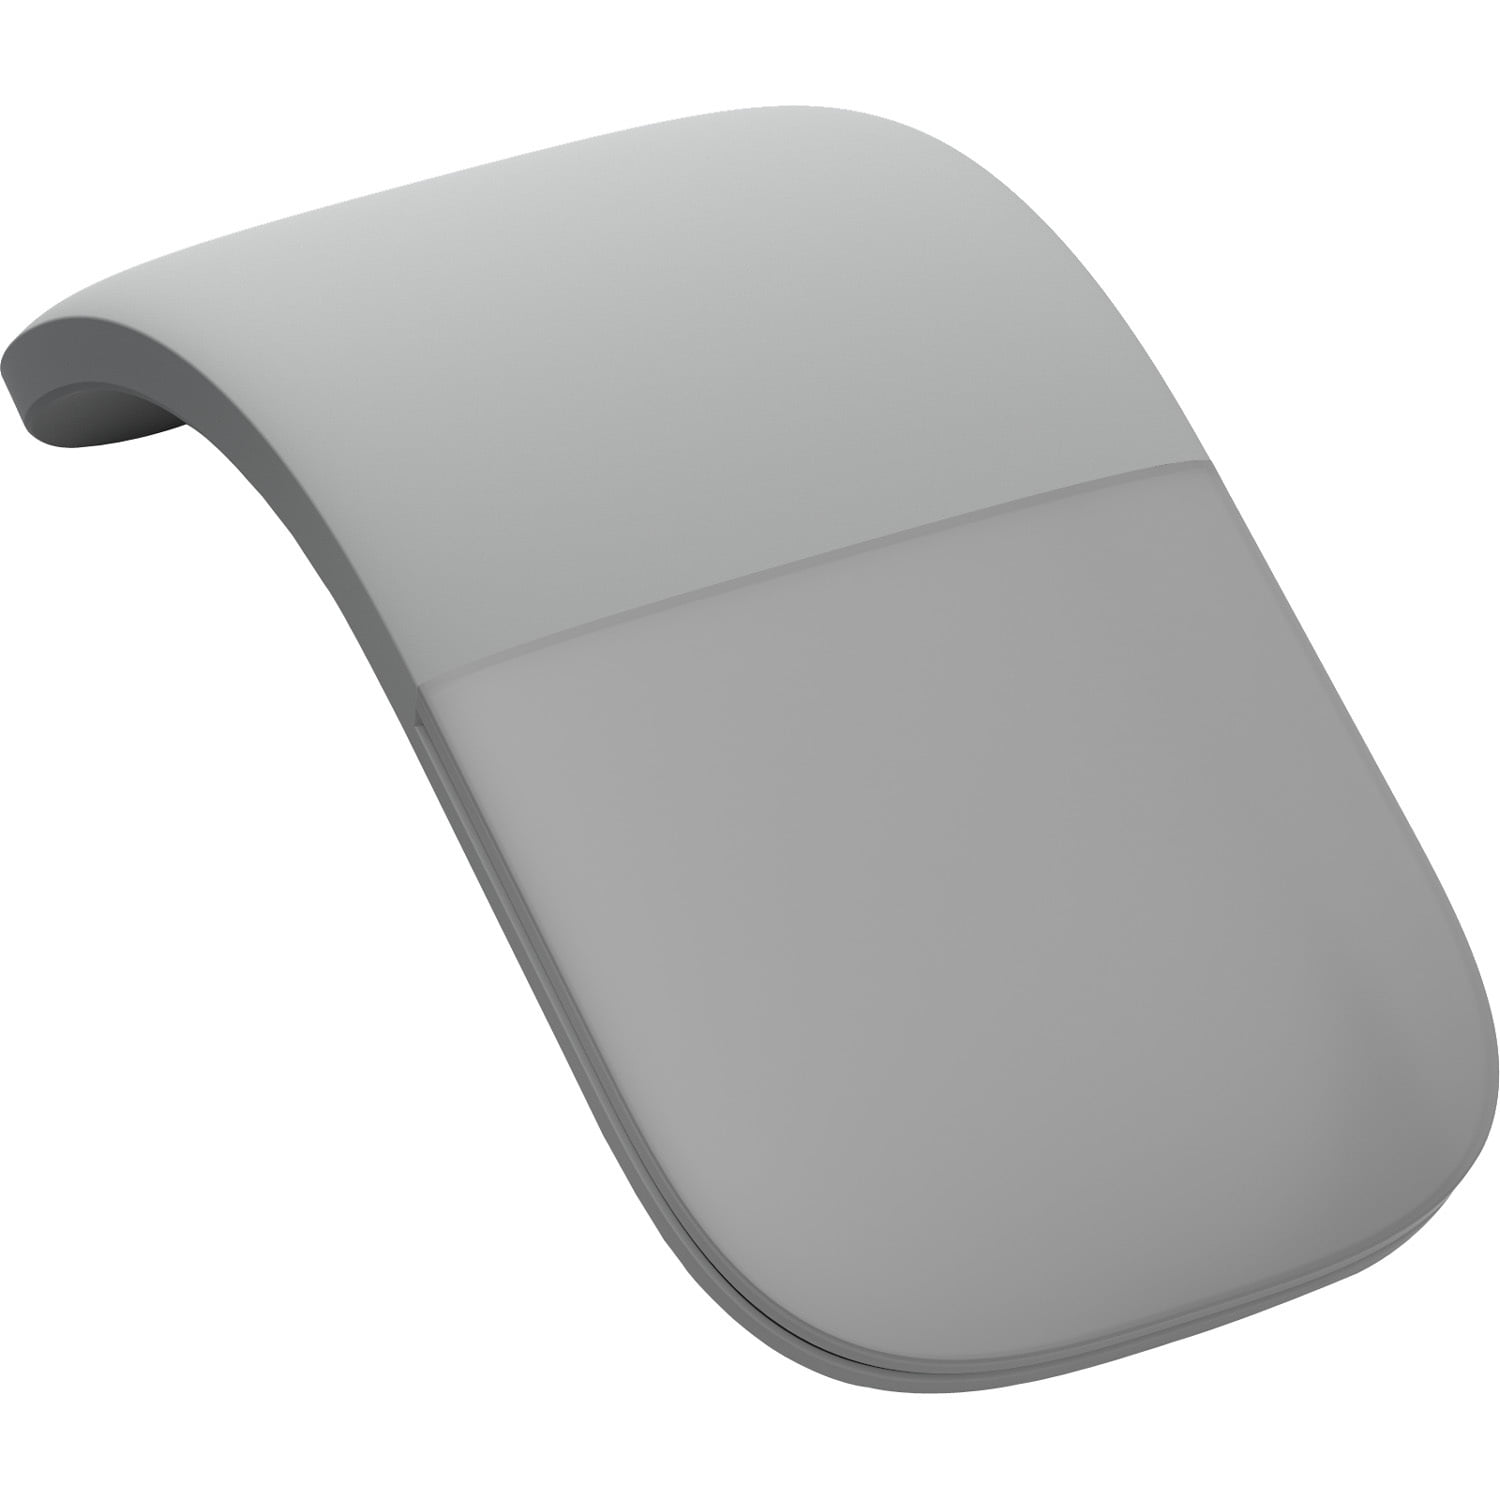 Surface Light Grey, Mouse, Microsoft CZV-00001 Arc